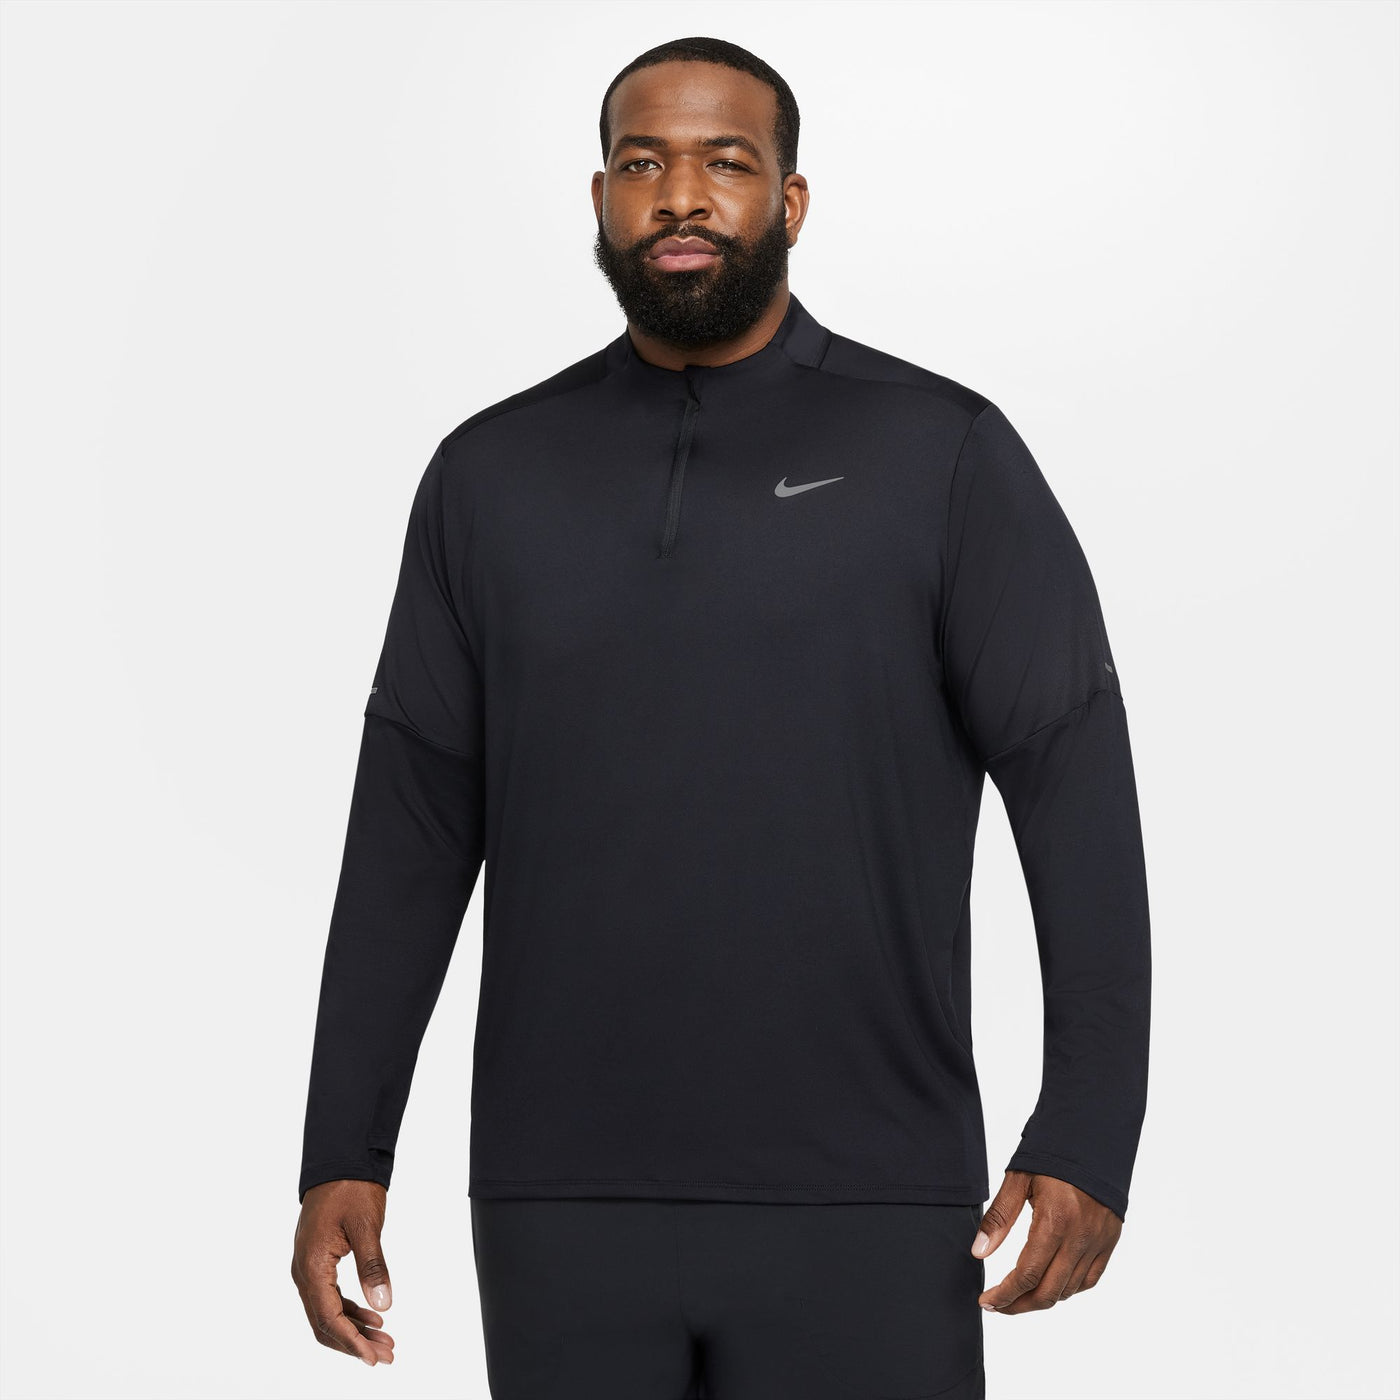 Men's Nike Element 1/2 Zip - DD4756-010